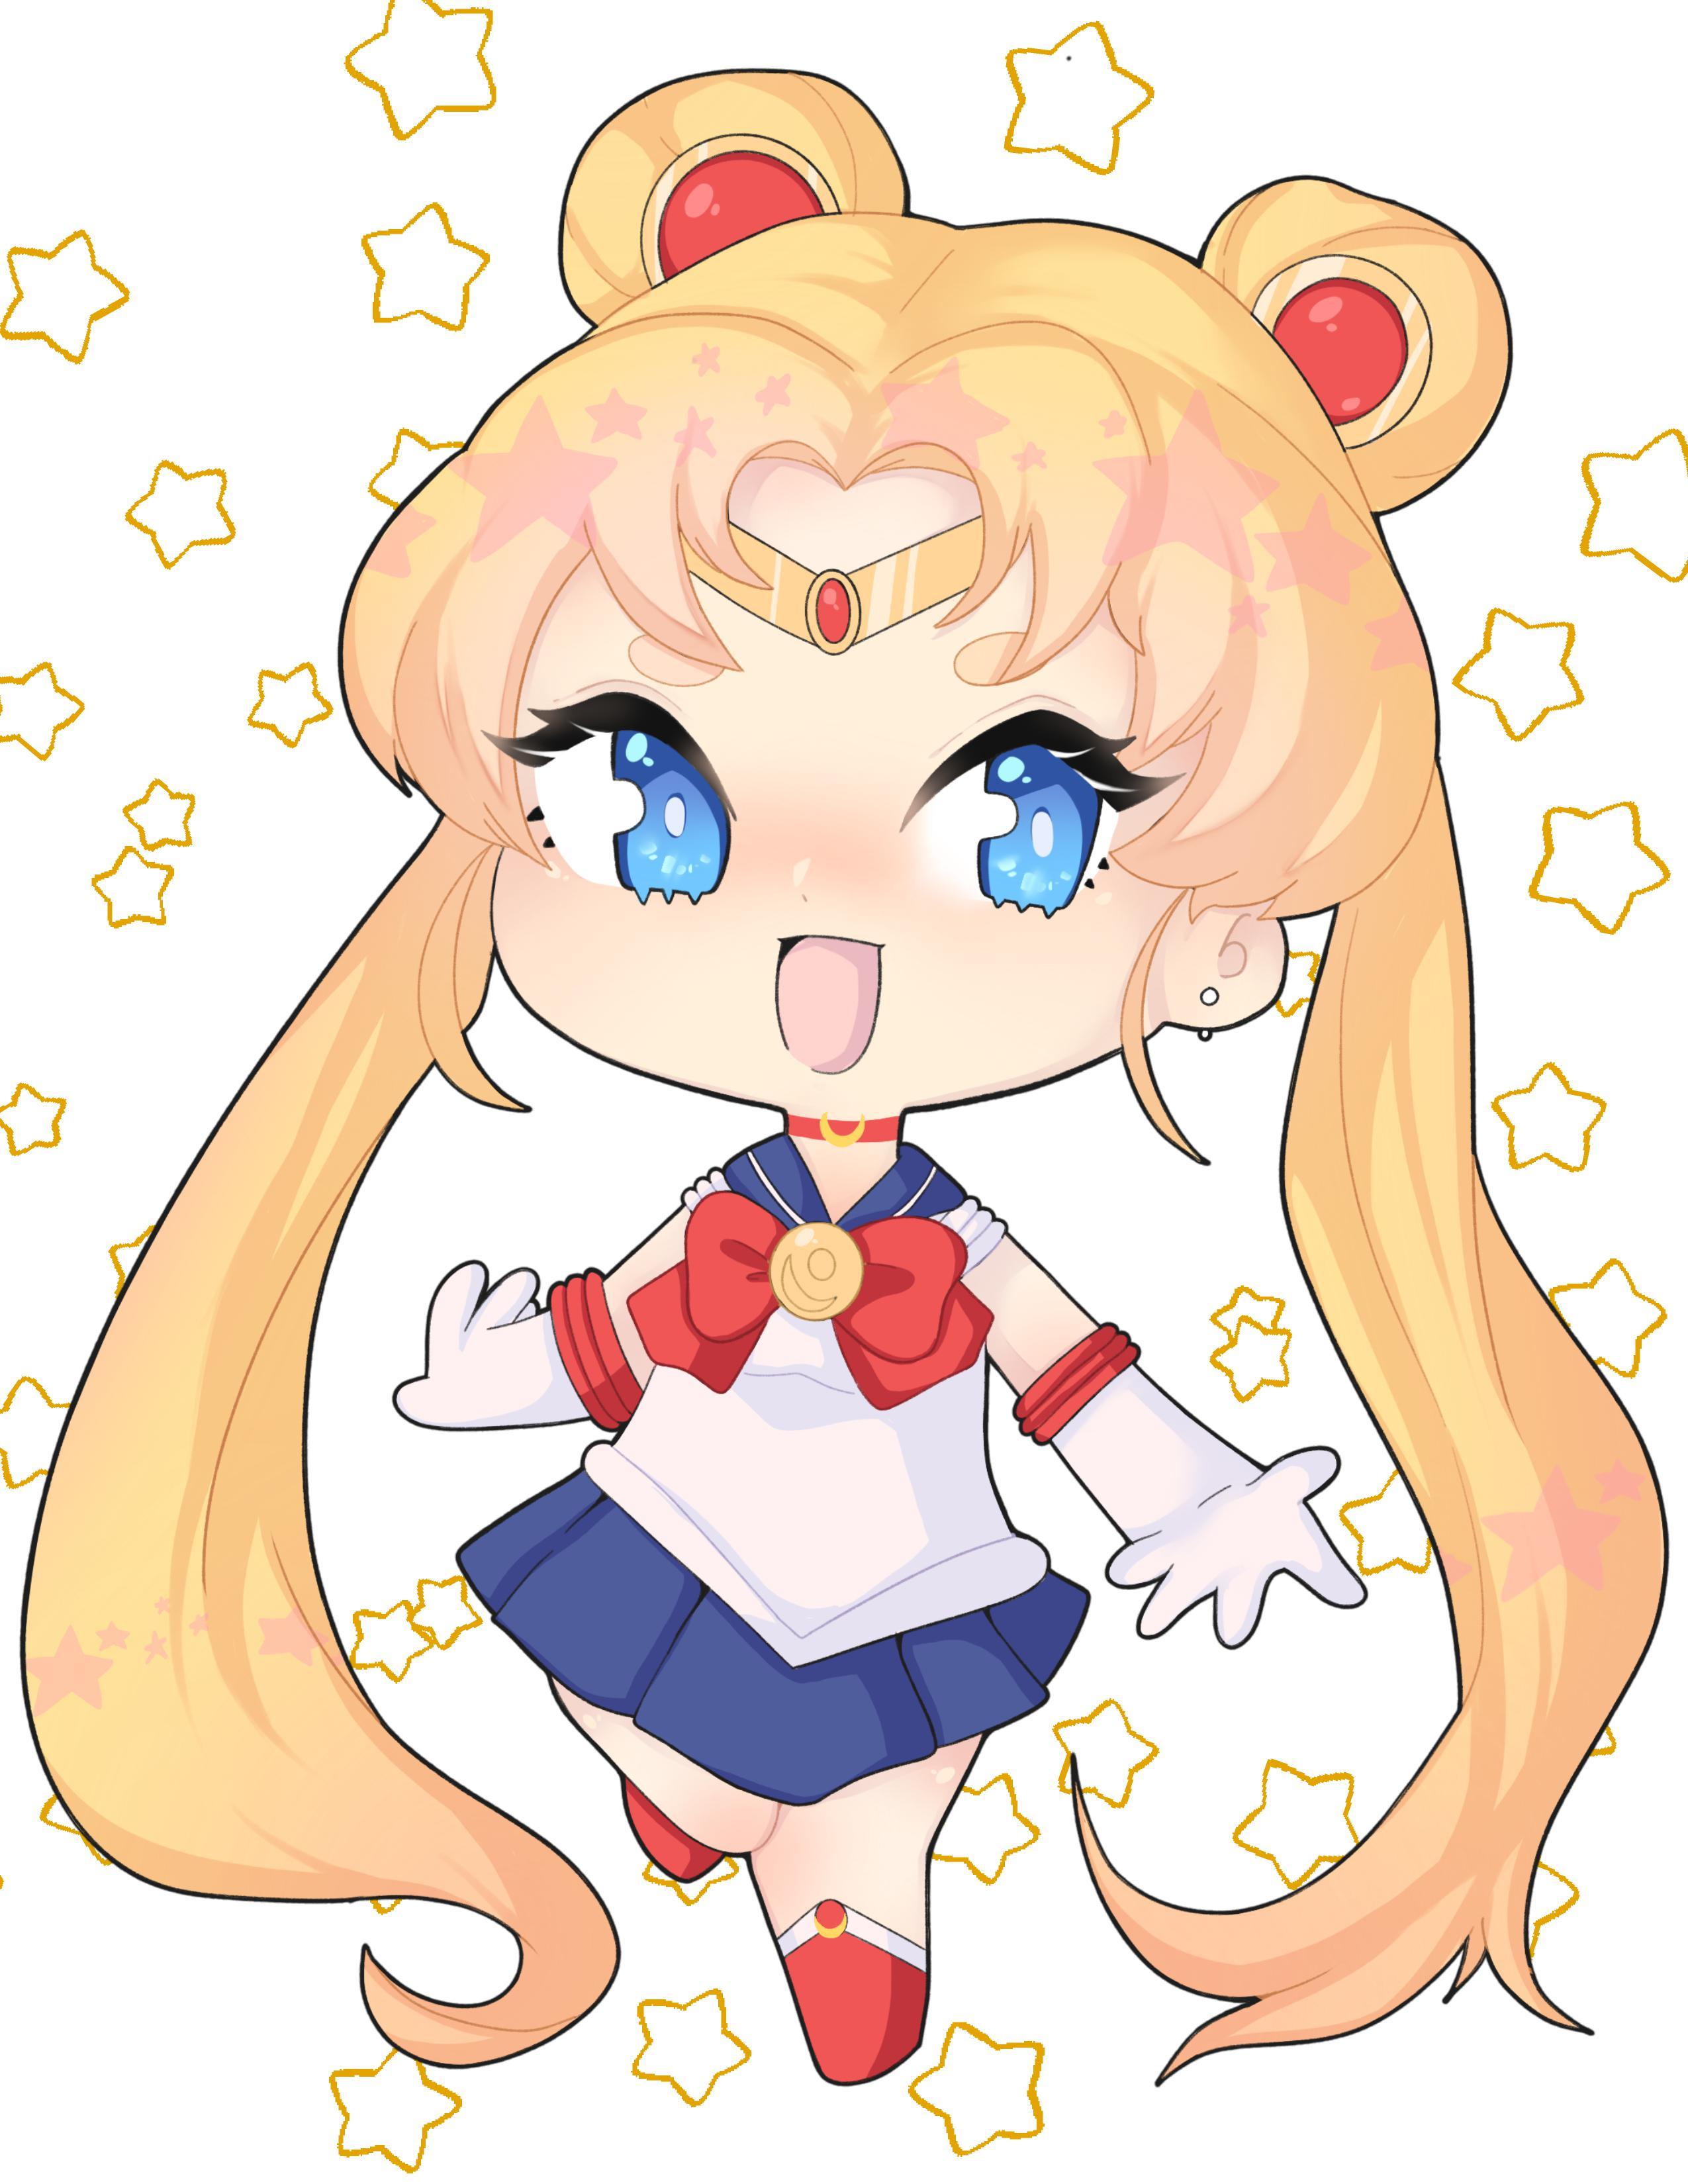 Chibi Sailor Moon artwork is mine rsailormoon